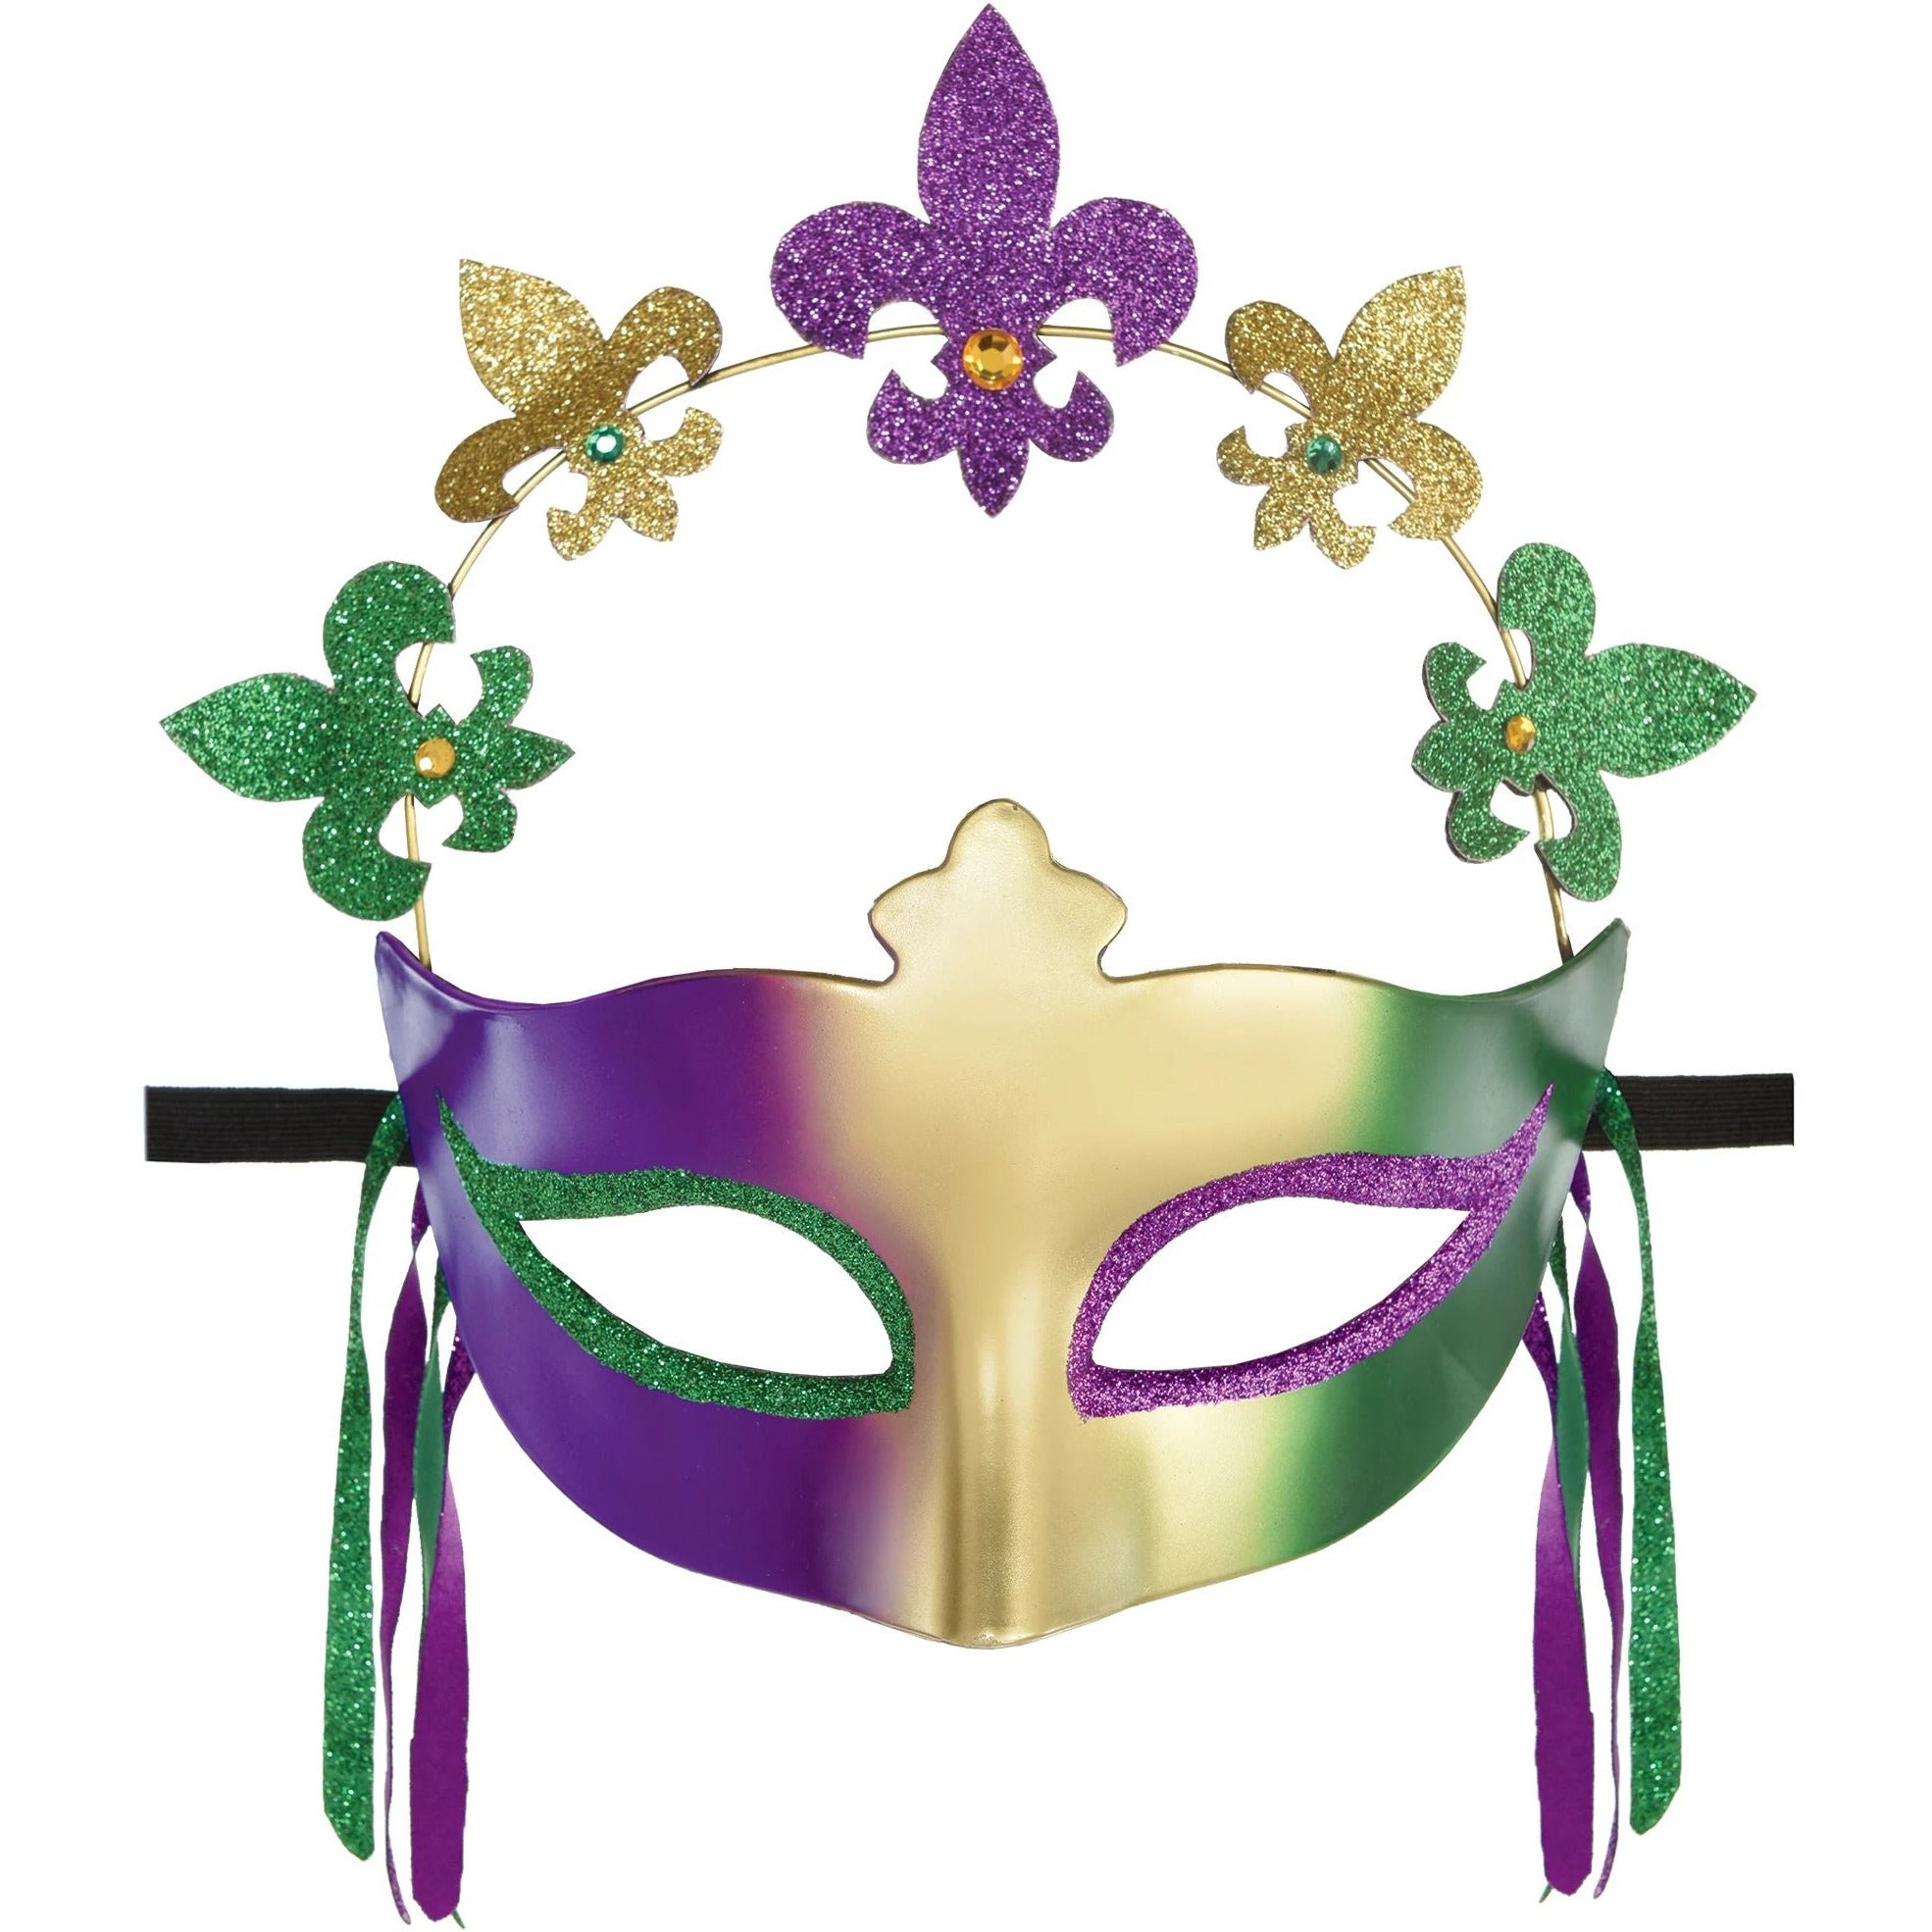 NEW Mardi Gras Masquerade Masks on a Stick FREE SHIPPING